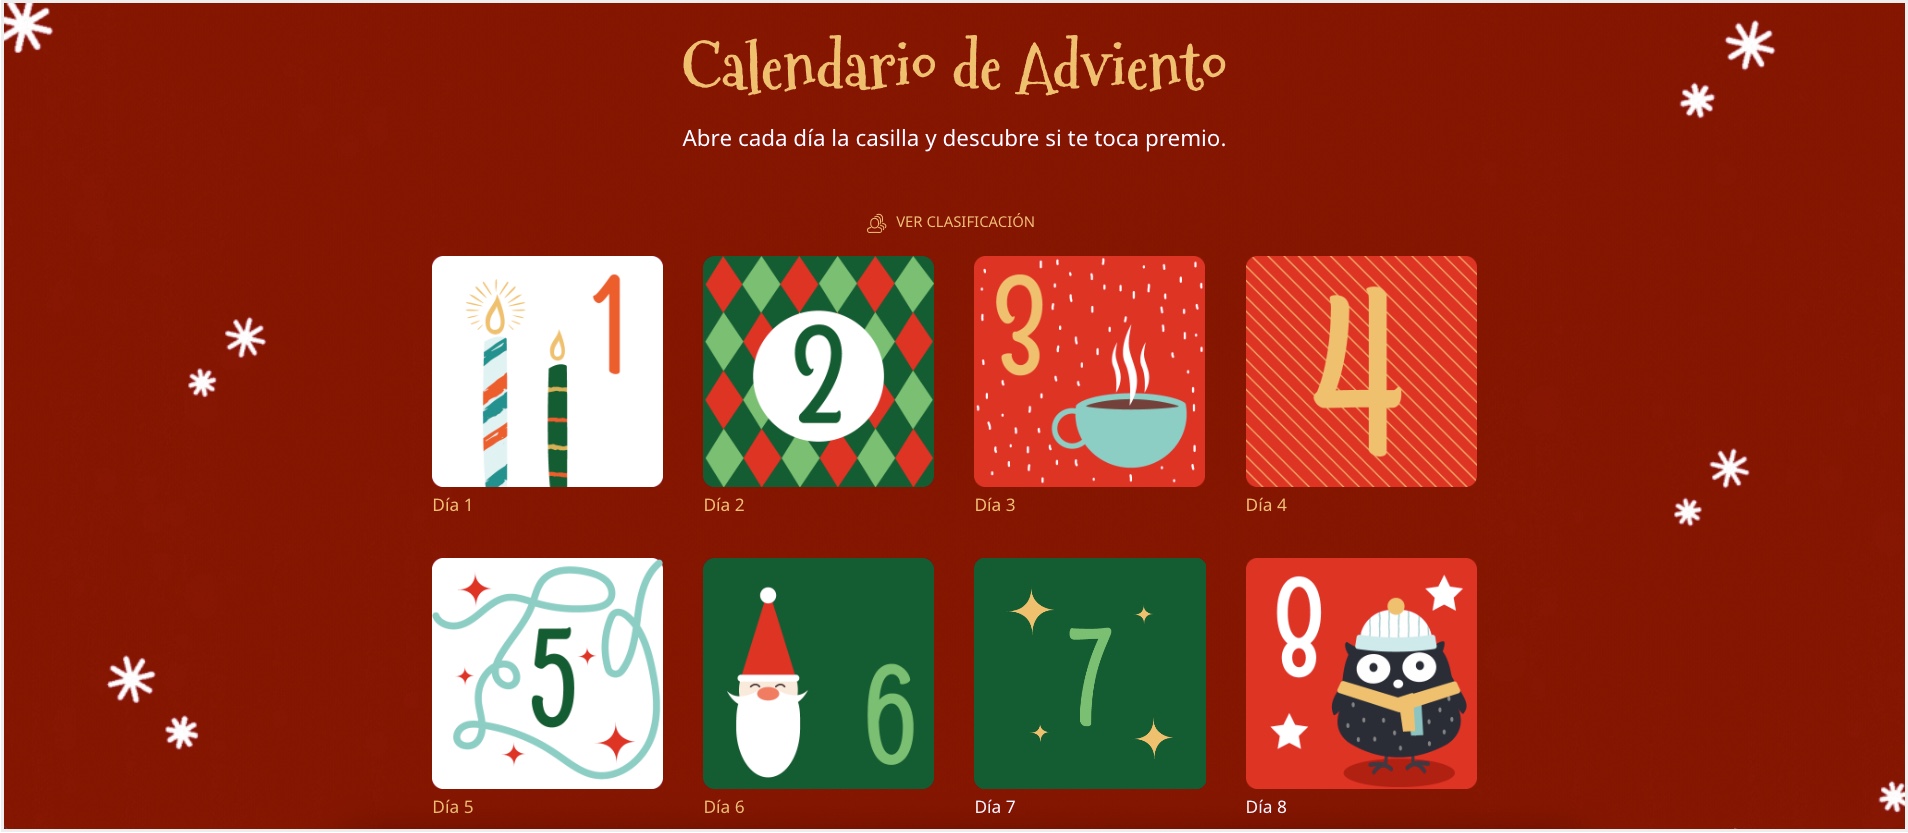 Calendario_Adviento_11.jpg